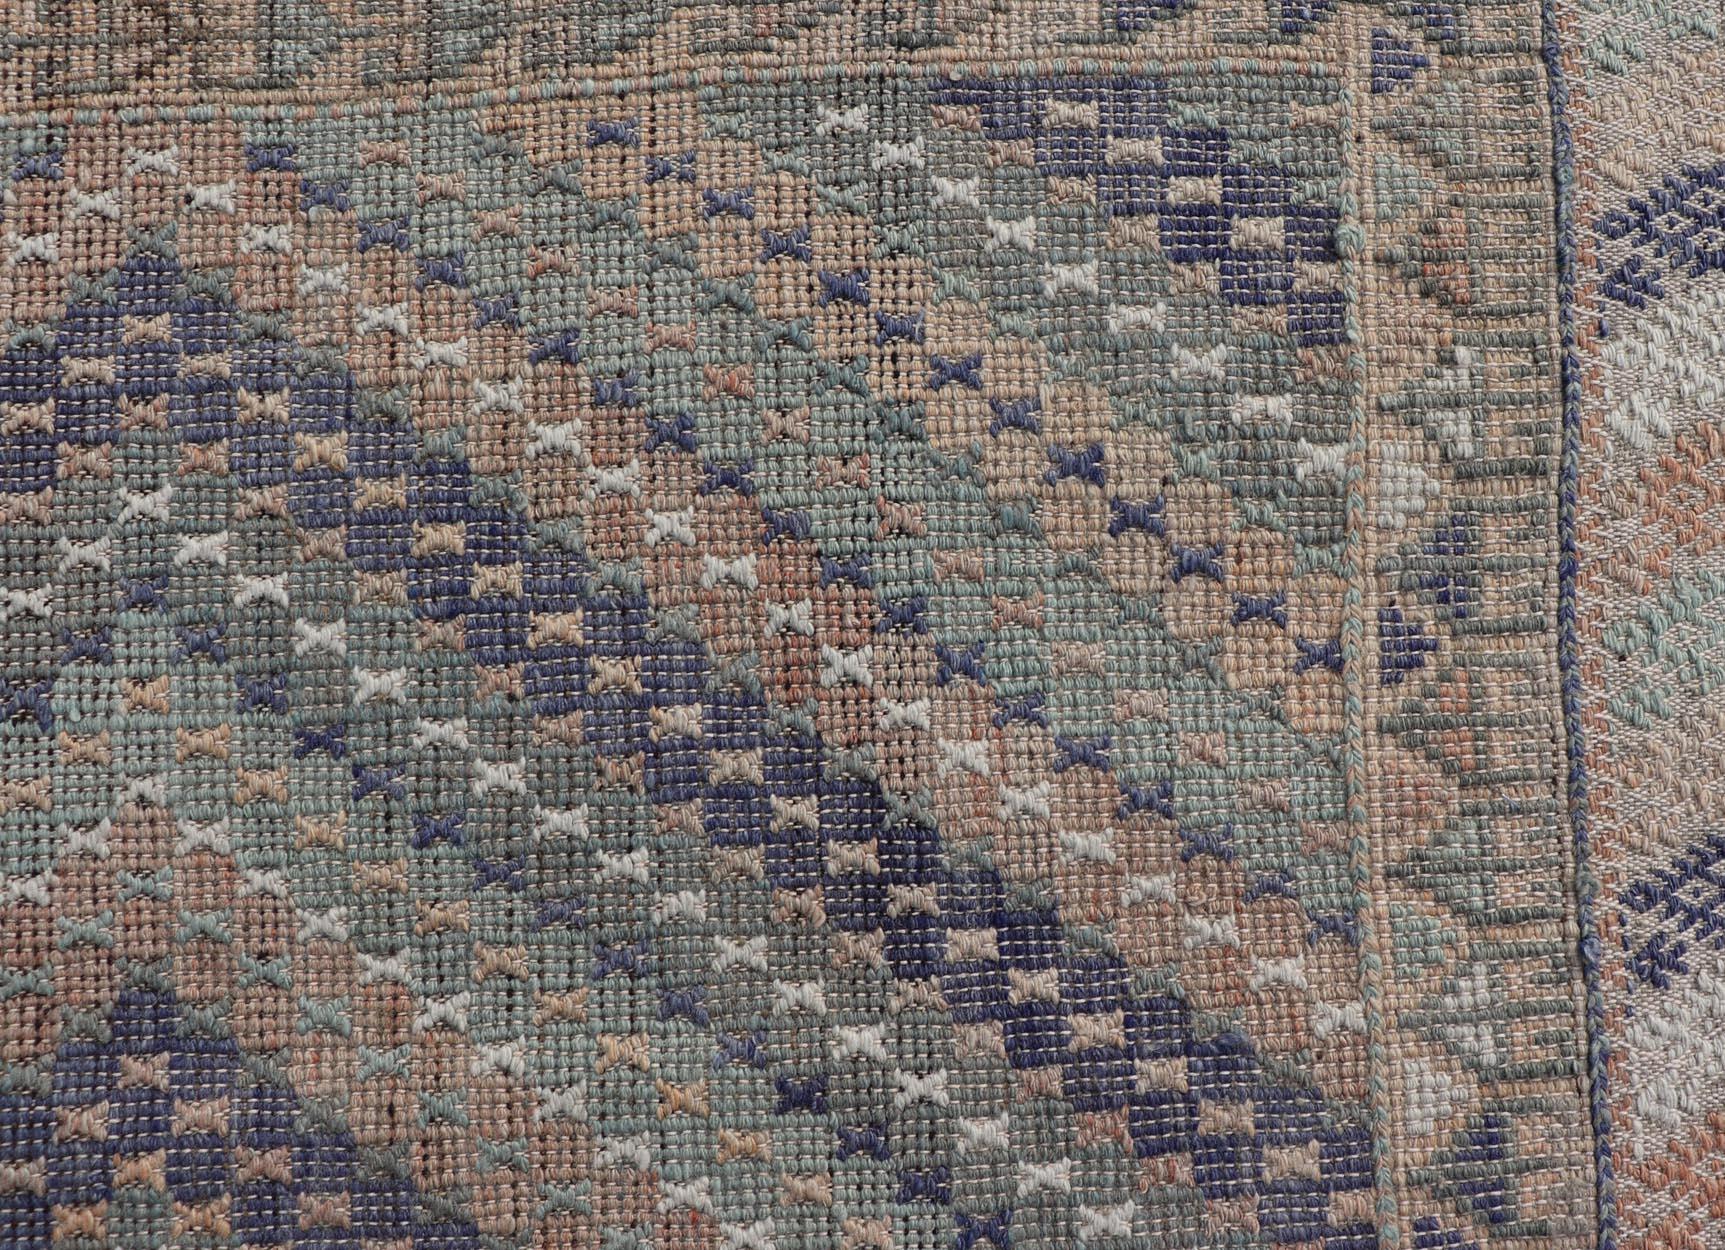 Vintage Turkish hand woven Kilim rug in wool with diamond design. Vintage Kilim rug with all-over sub-geometric diamond design, Keivan Woven Arts; rug TU-NED-50001, country of origin / type: Turkey / Kilim, circa 1950.

Measures: 6'2 x 10'10 

This